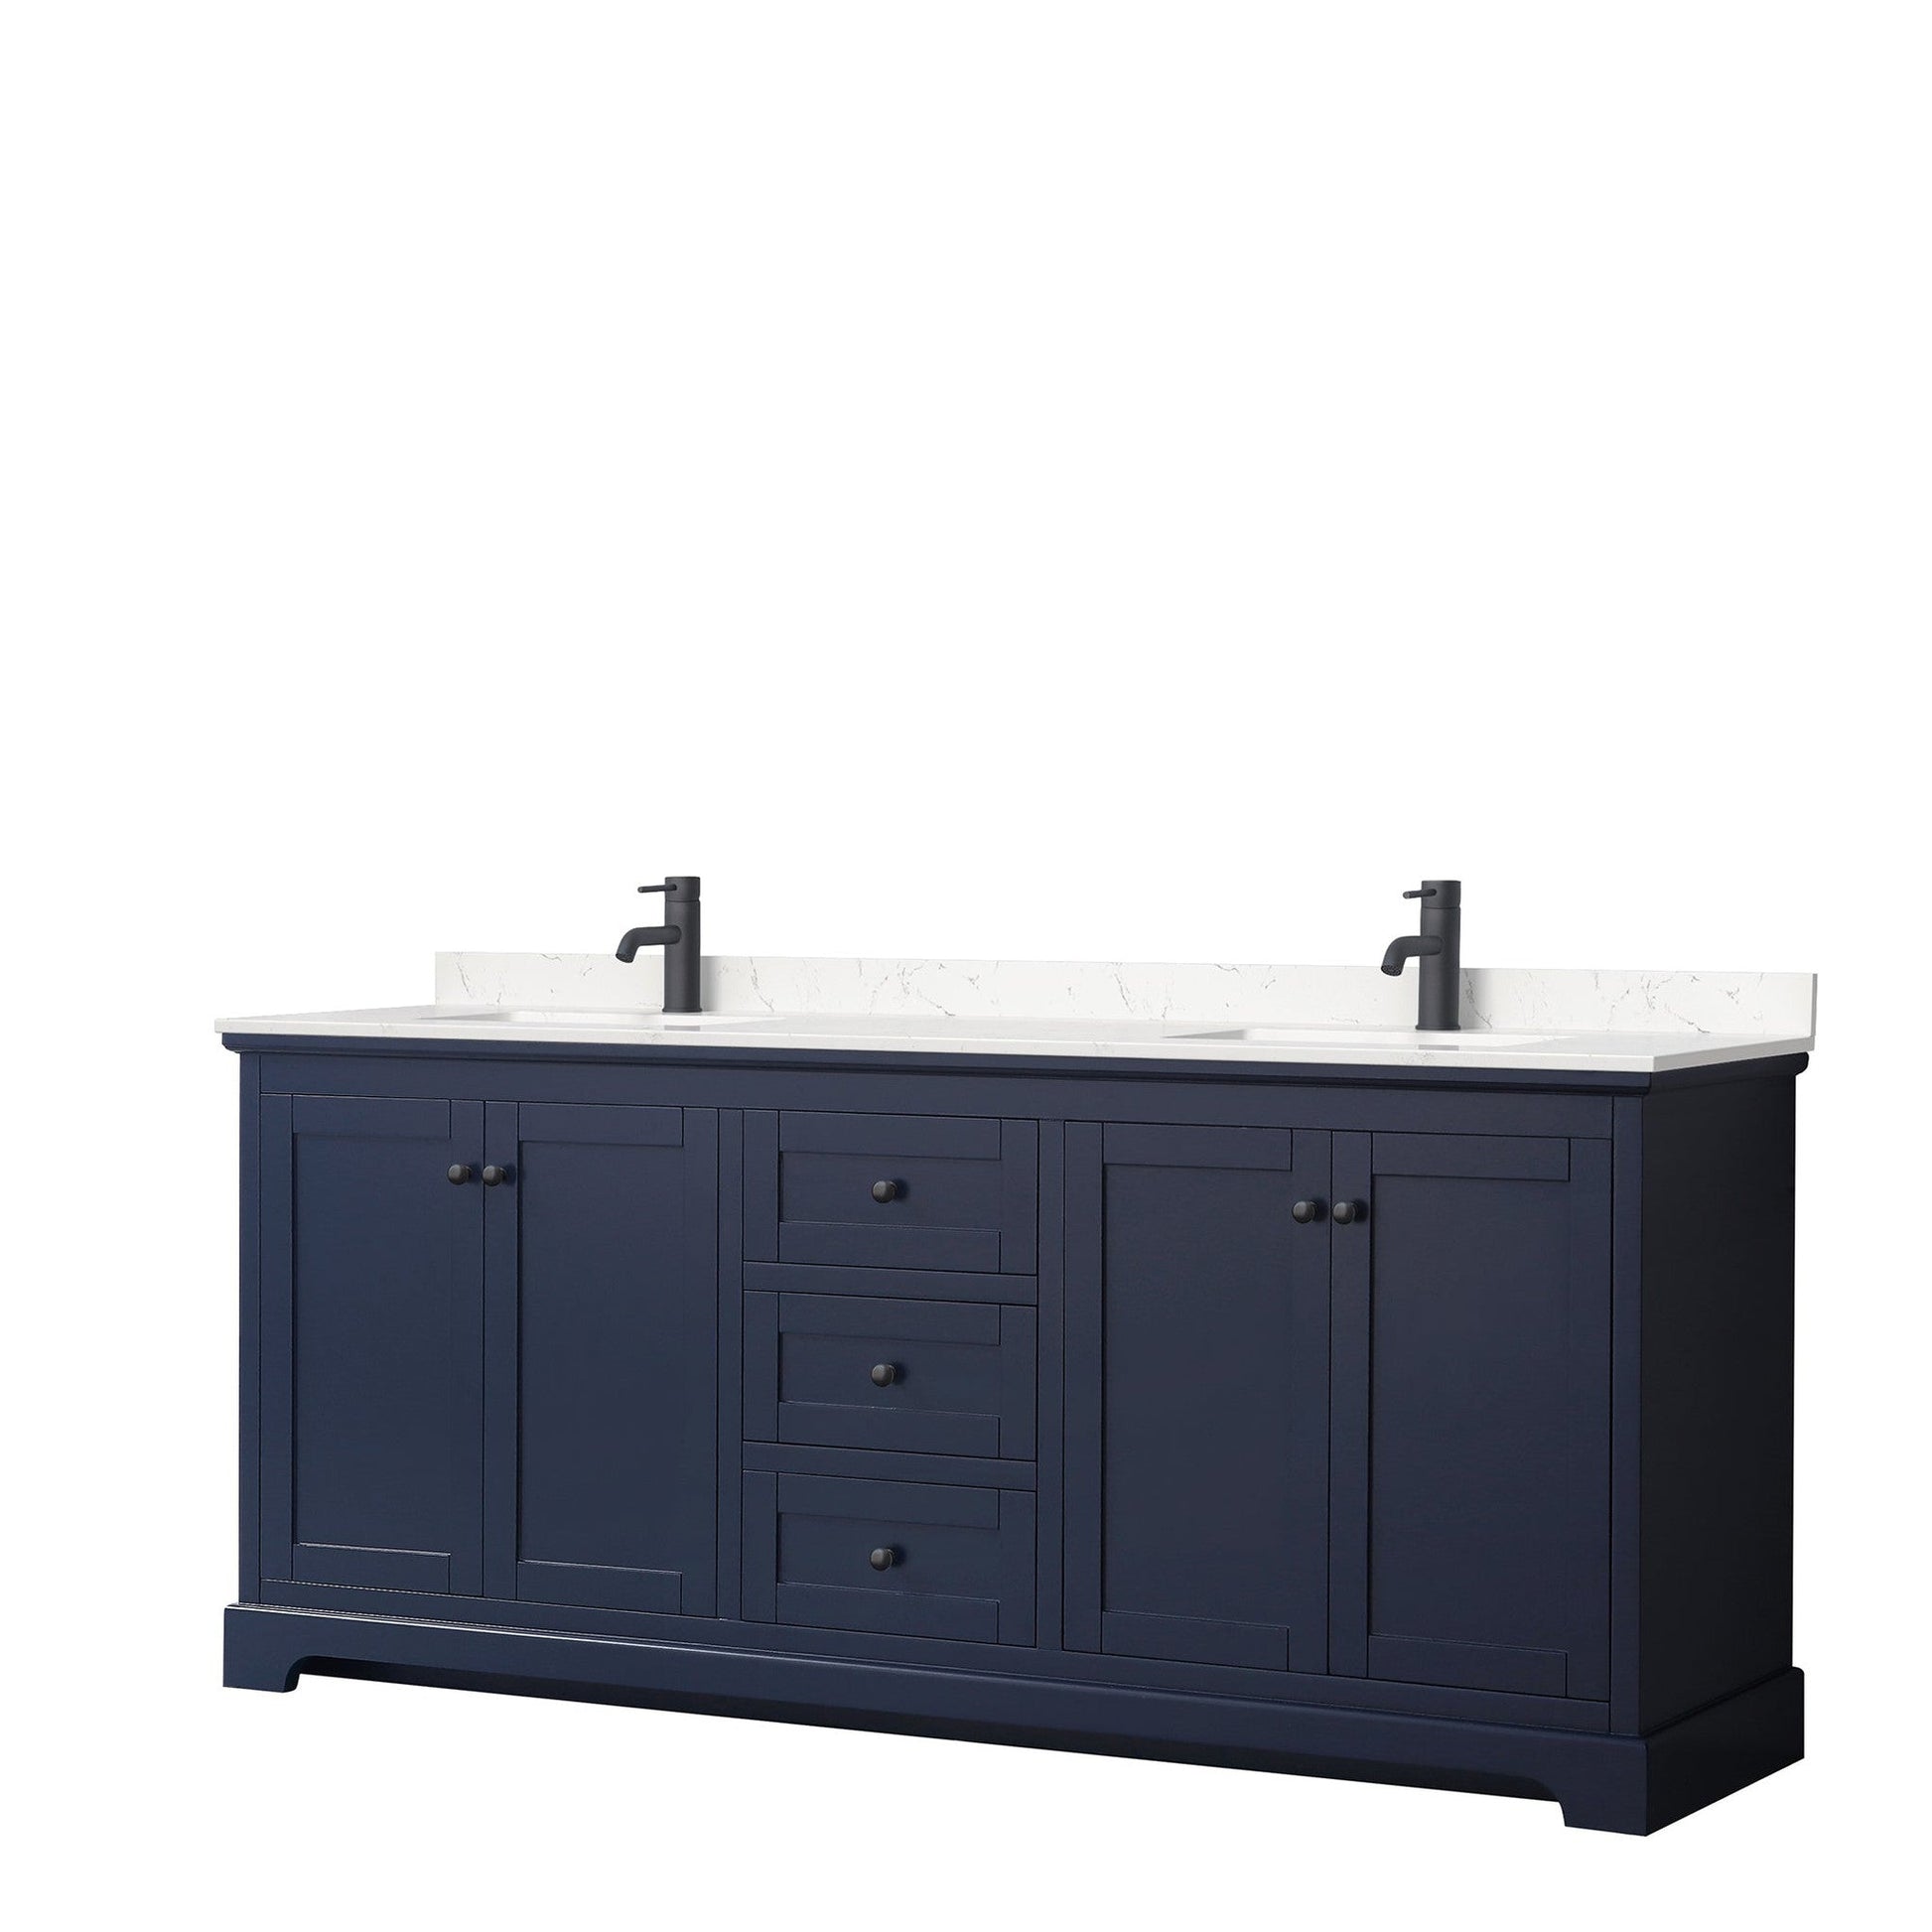 Avery 80" Double Bathroom Vanity in Dark Blue, Carrara Cultured Marble Countertop, Undermount Square Sinks, Matte Black Trim